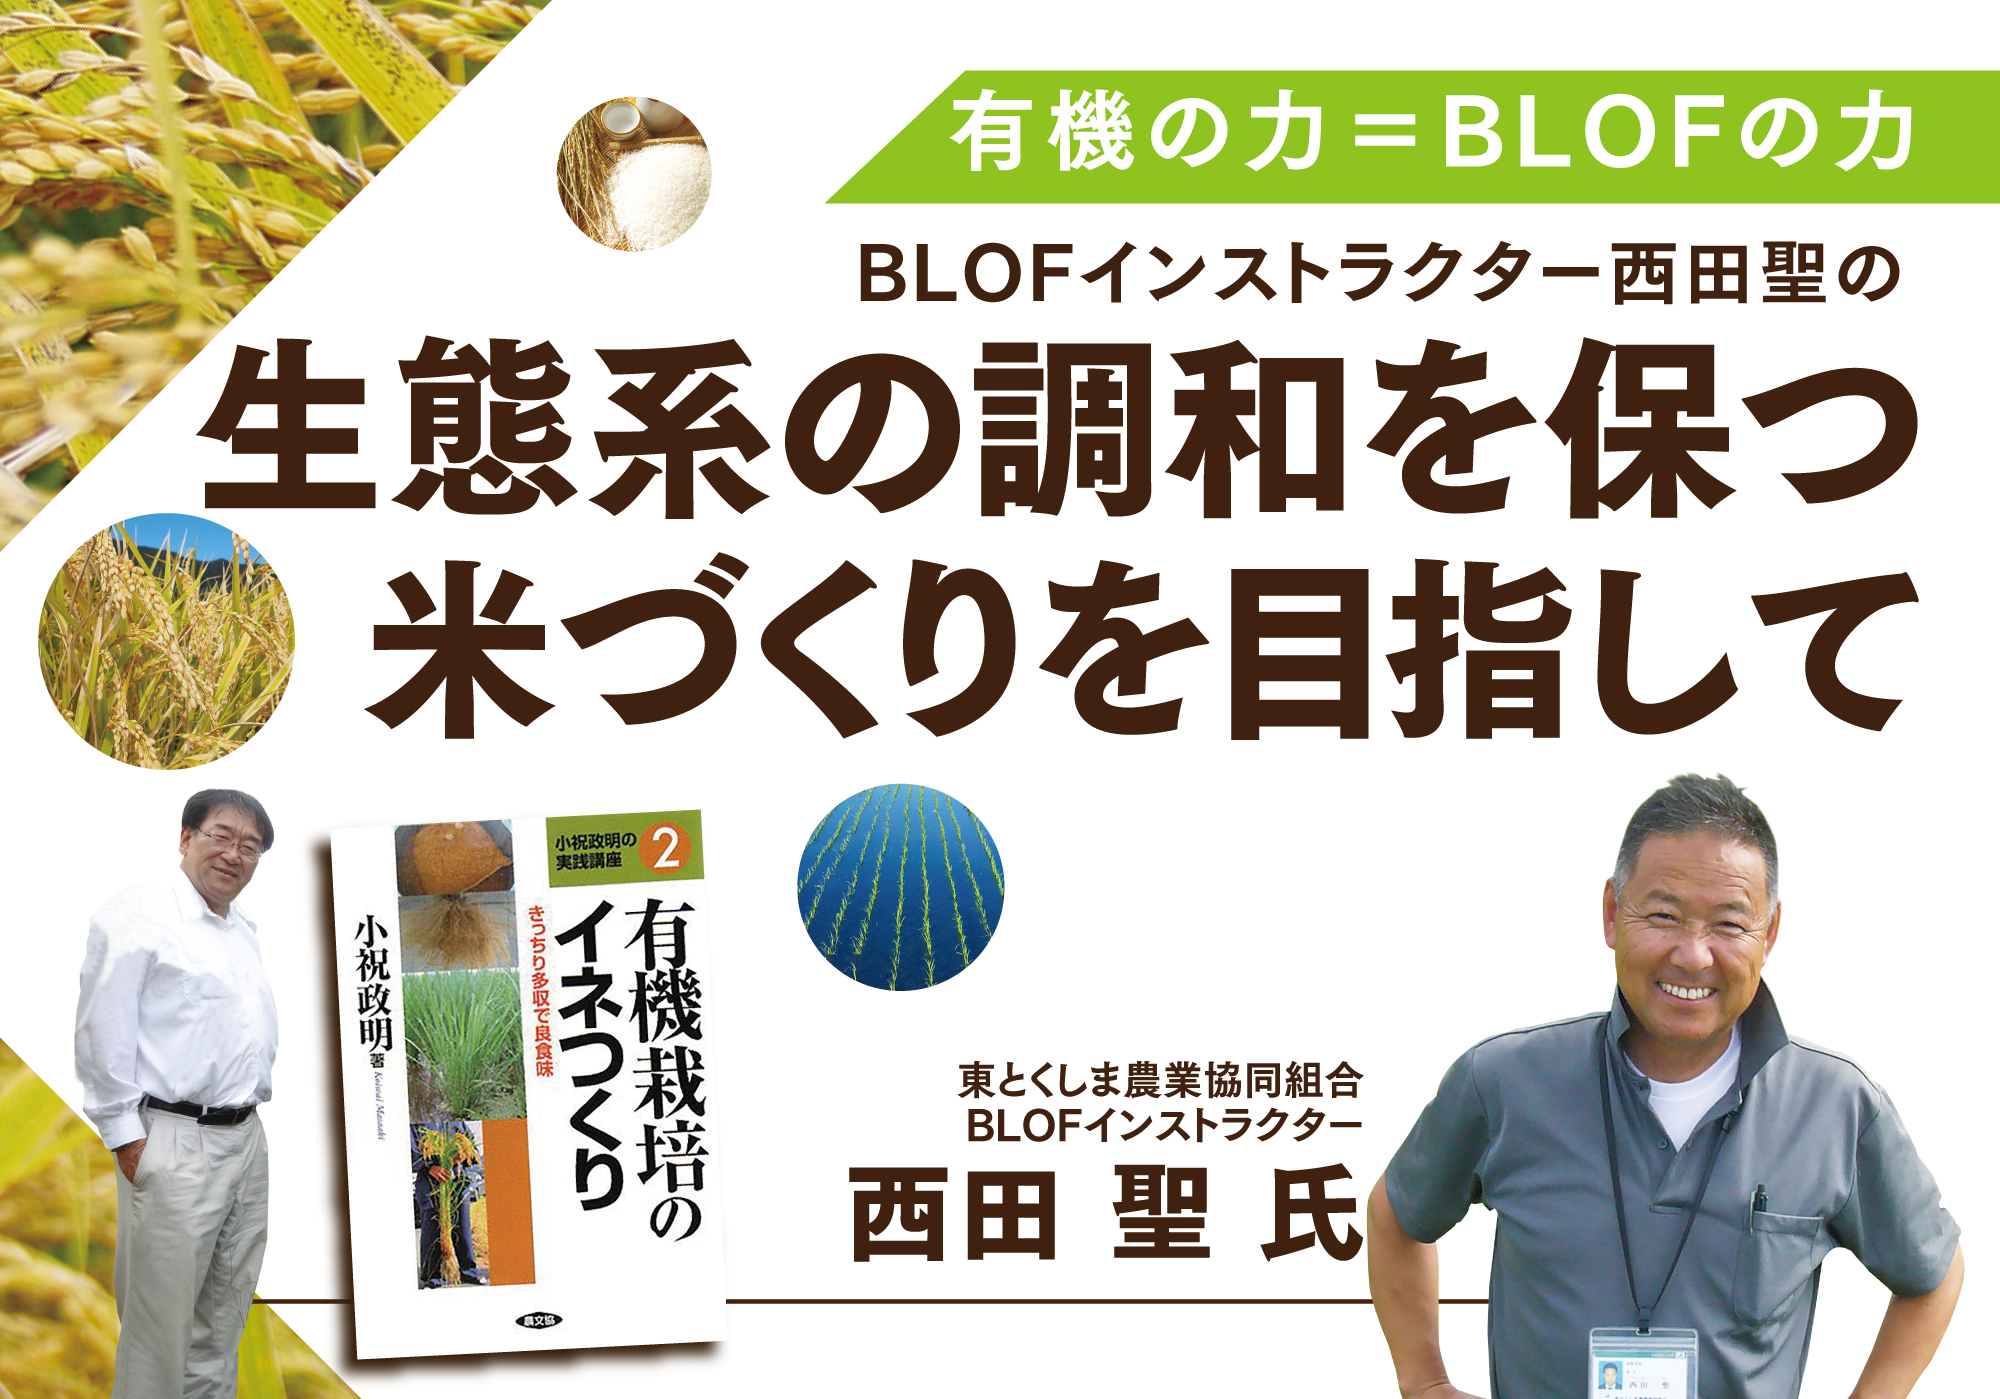 BLOF勉強会「生態系の調和を保つ米づくりを目指して」 | オーガニック